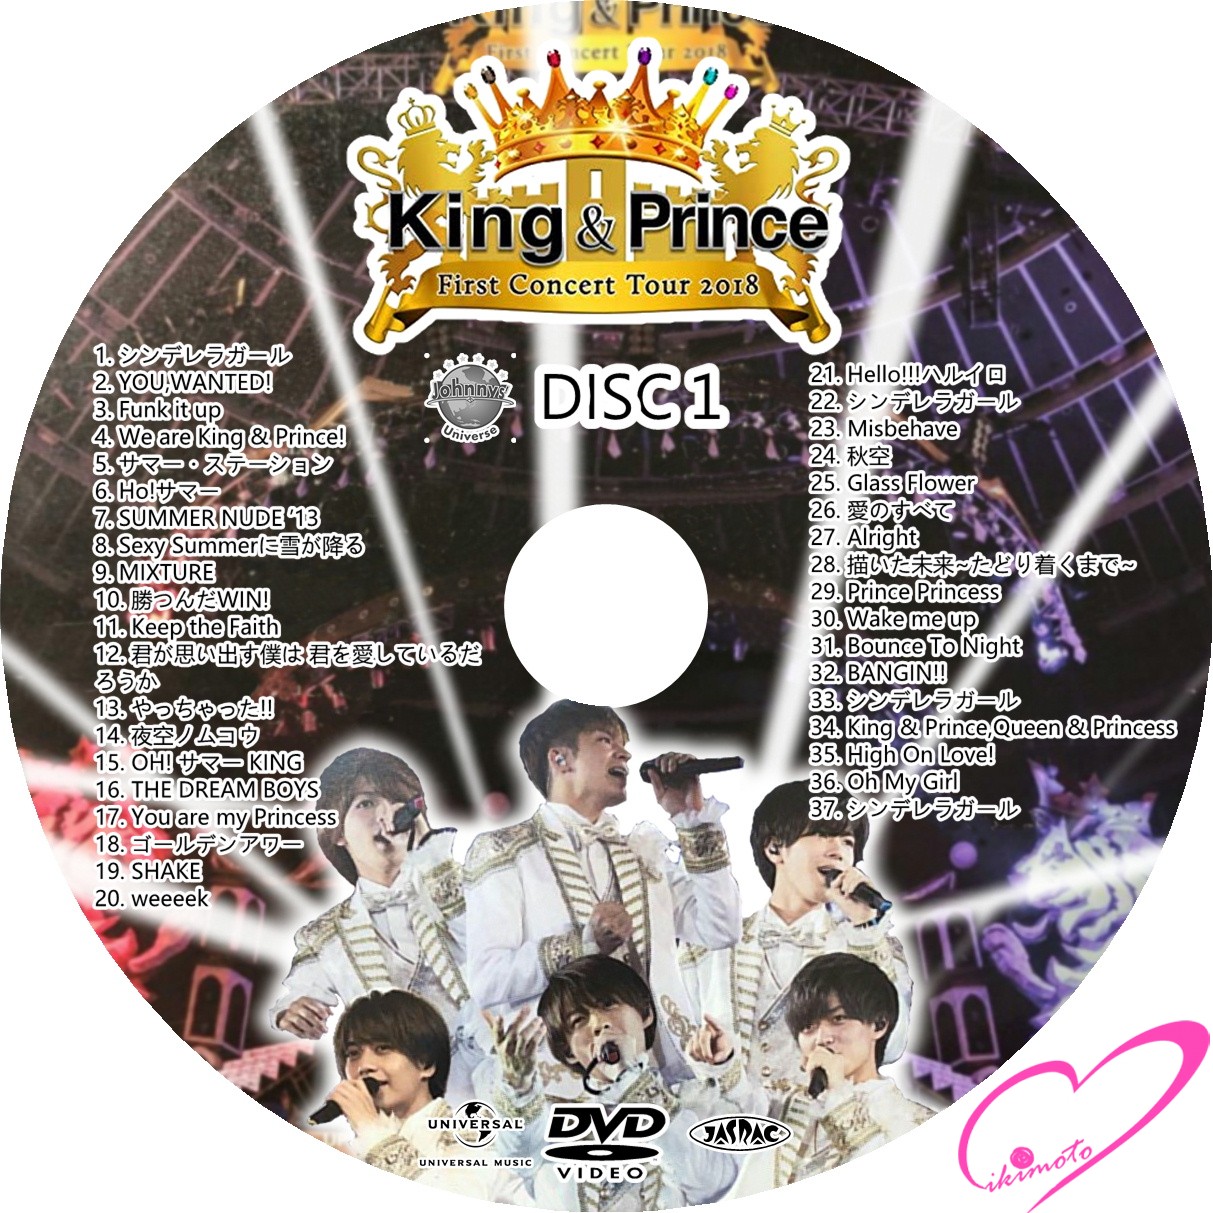 King Prince/First Concert Tour 2018 - rehda.com